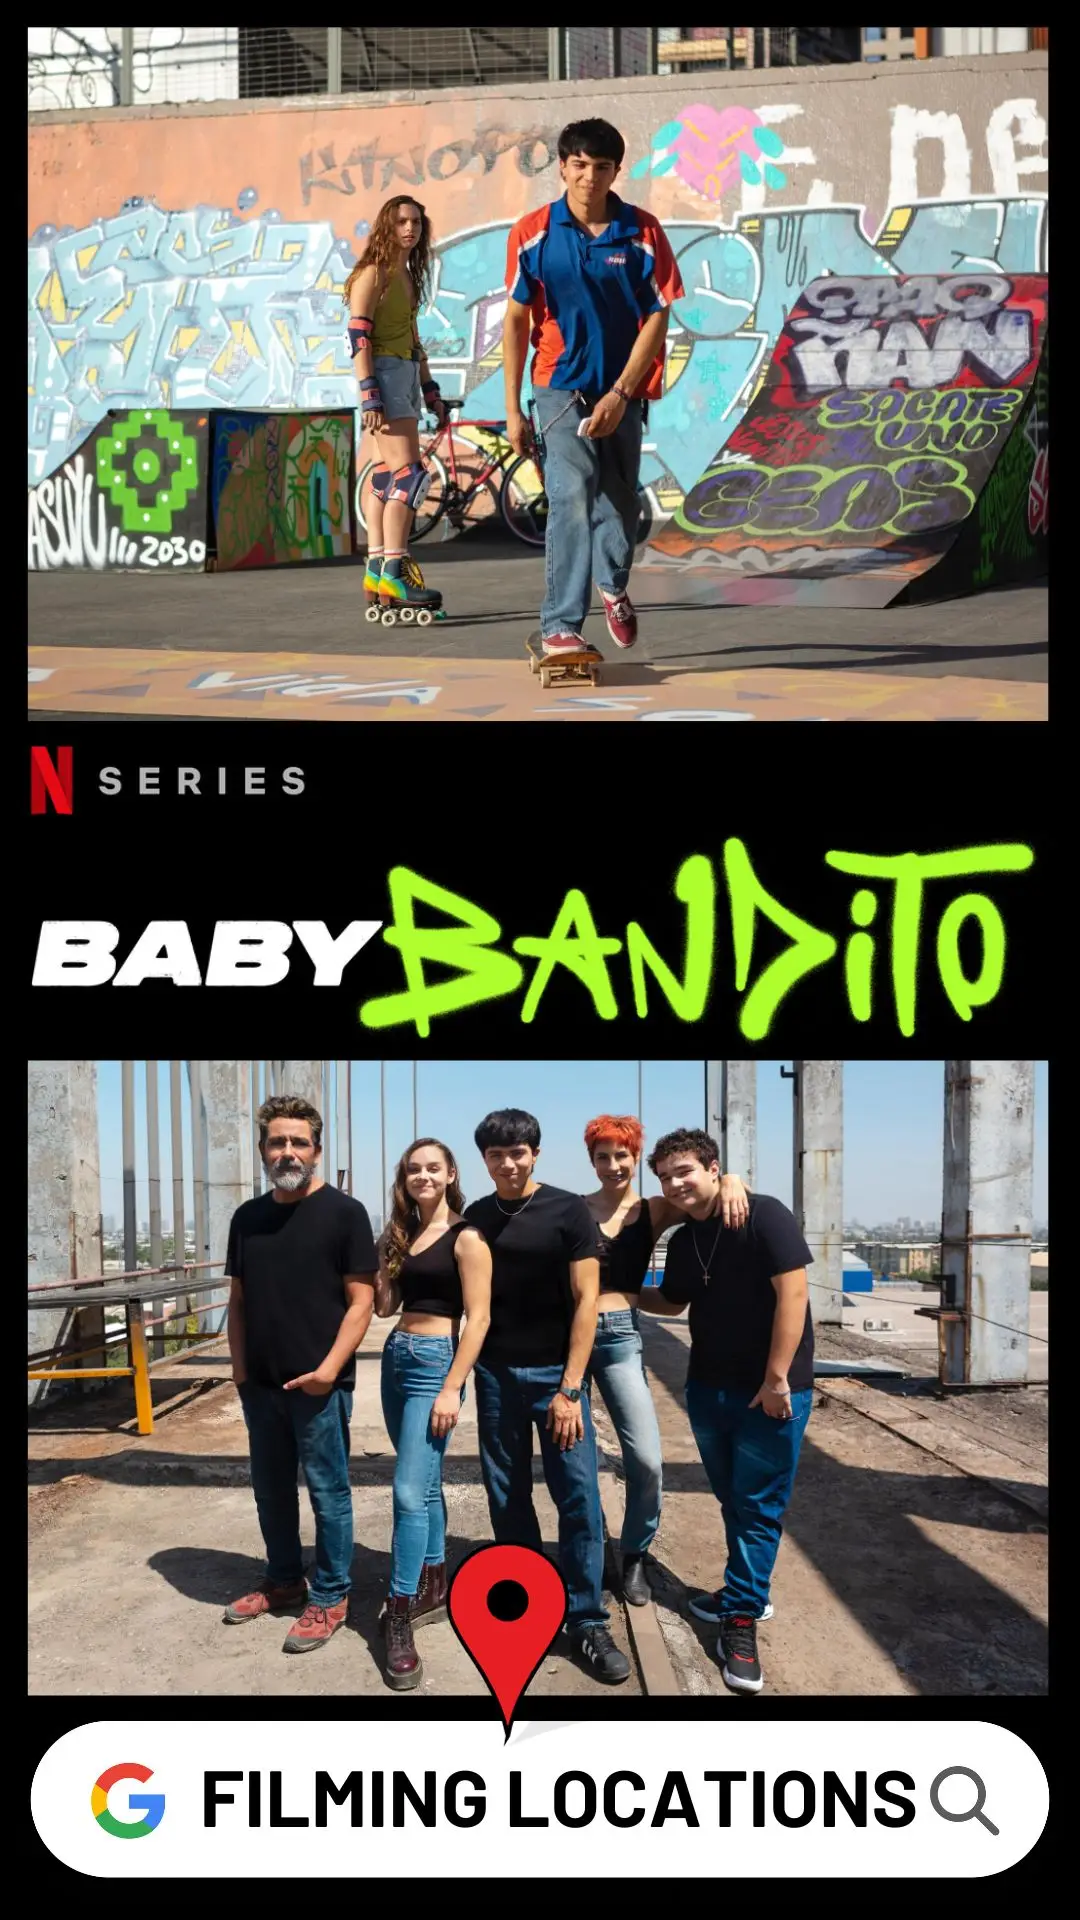 Baby Bandito Filming Locations